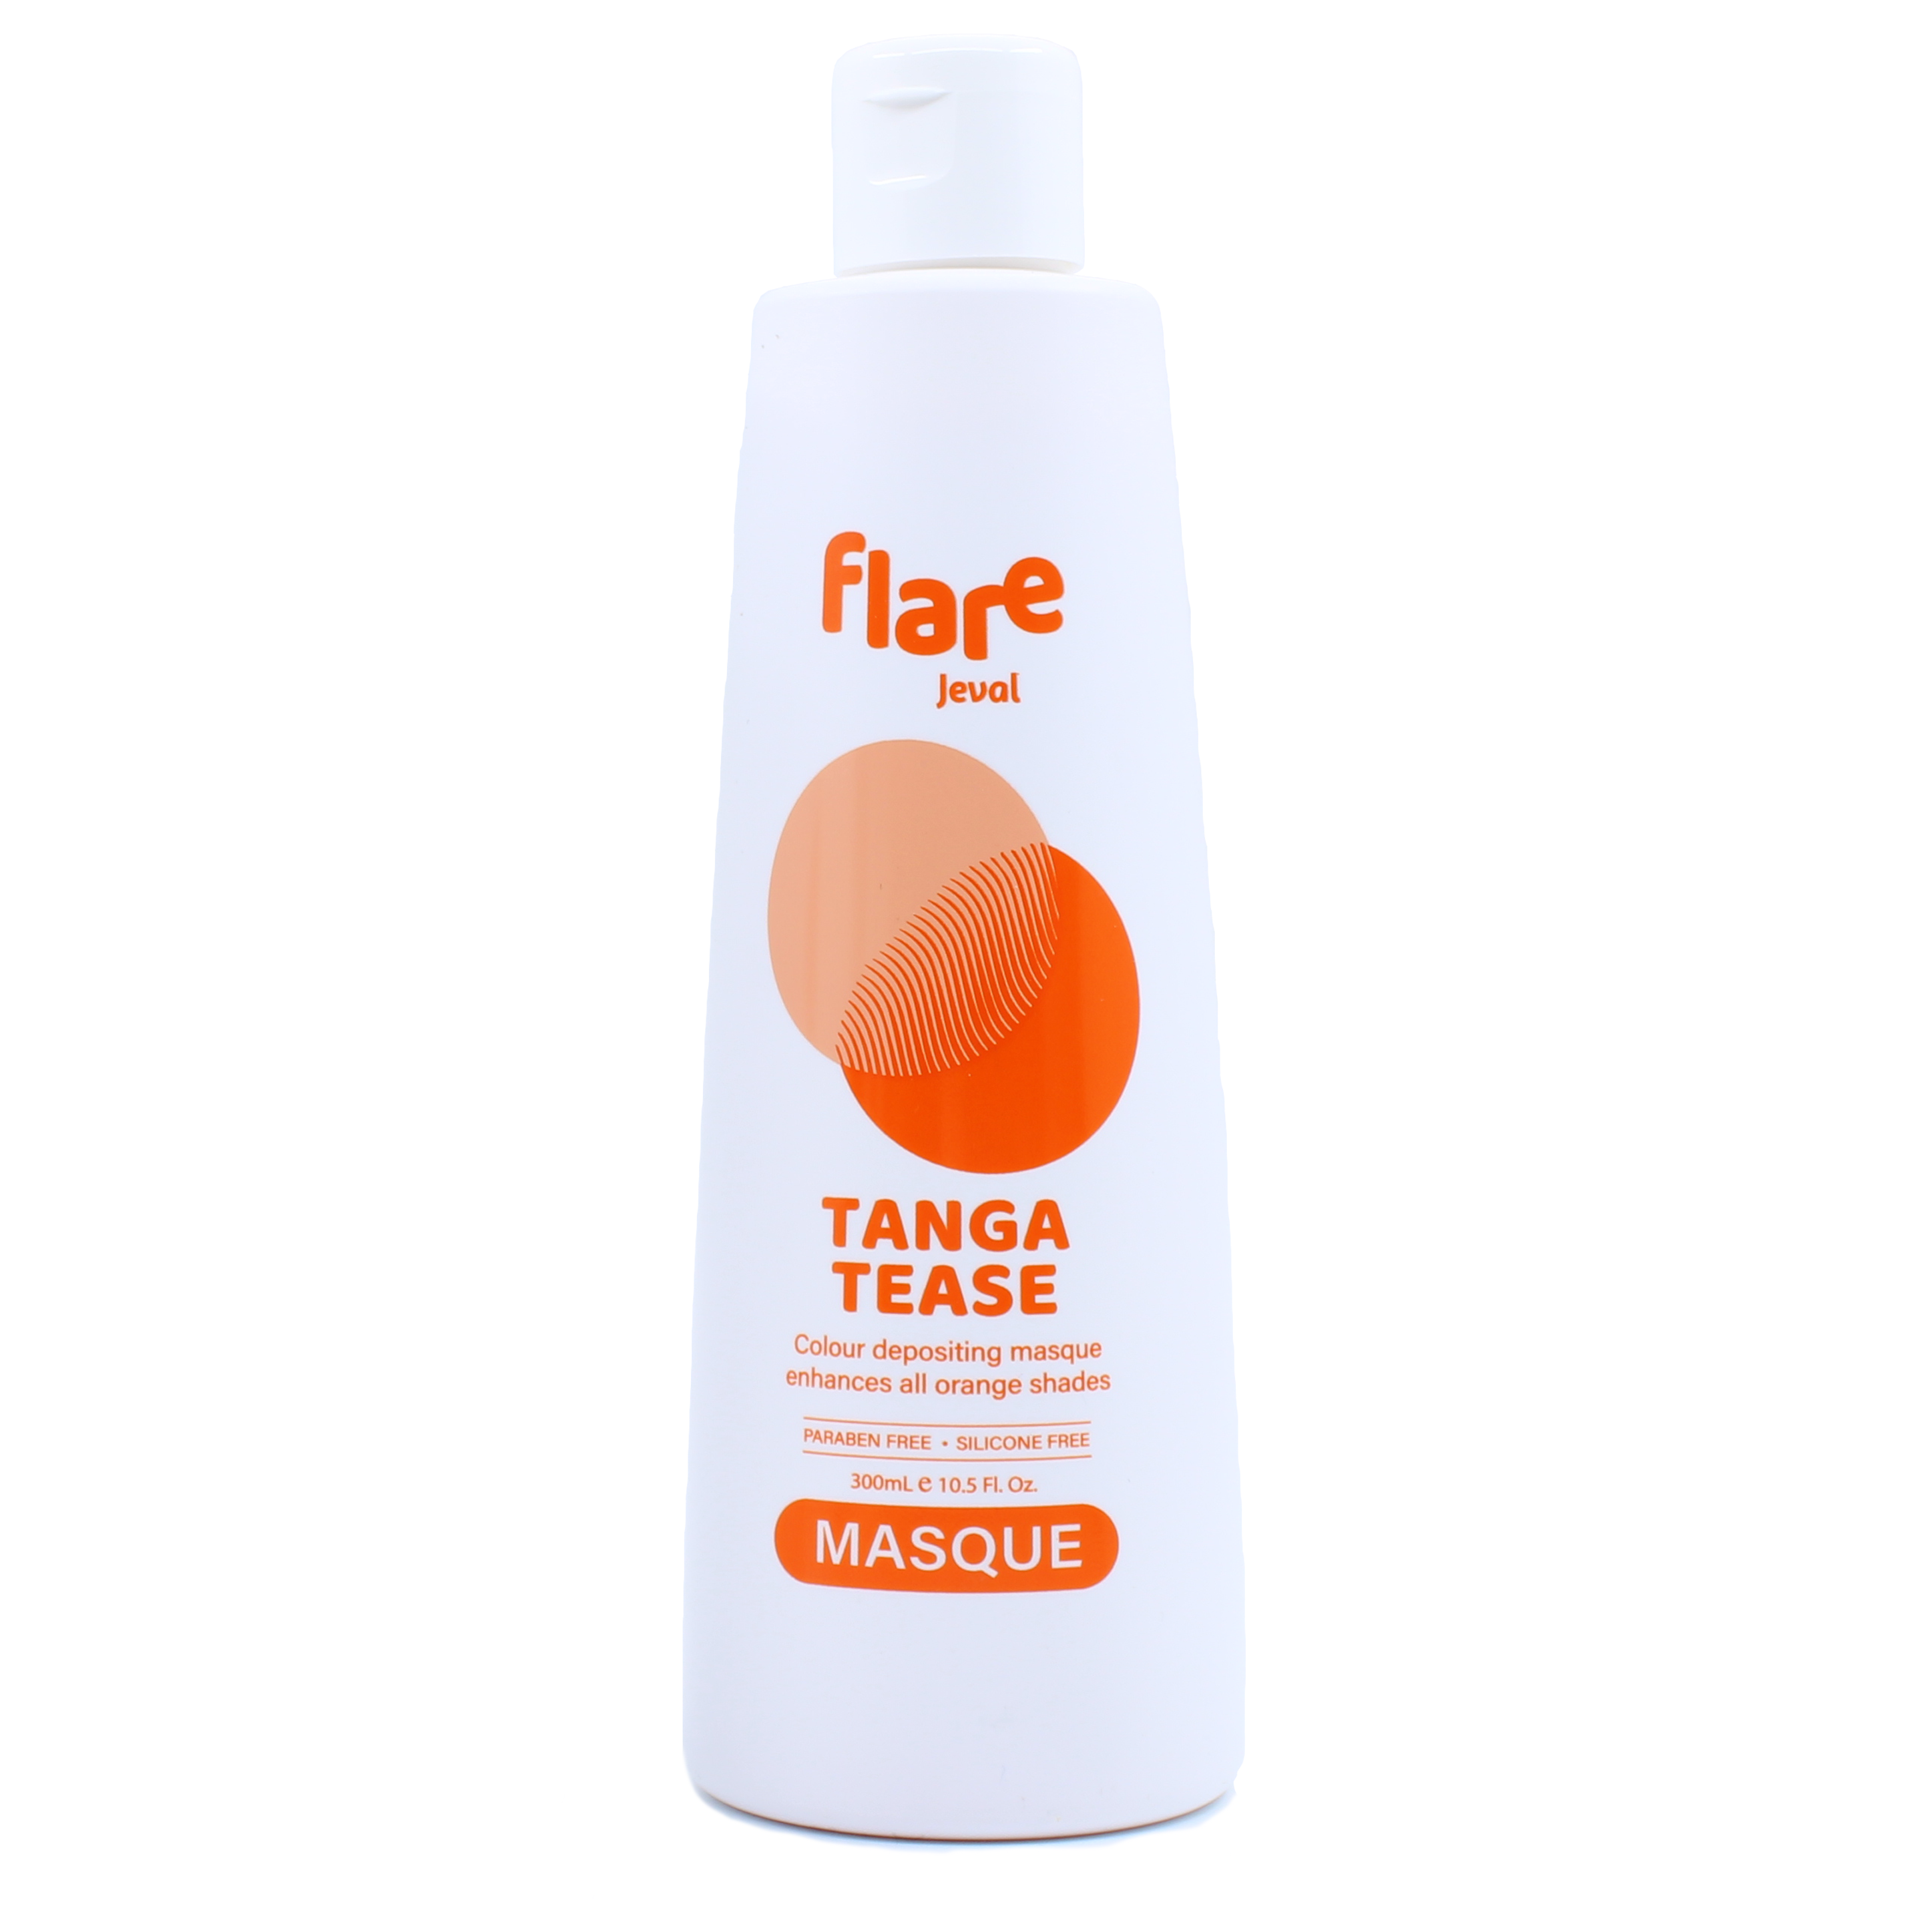 Flare Tanga Tease Masque 300ml